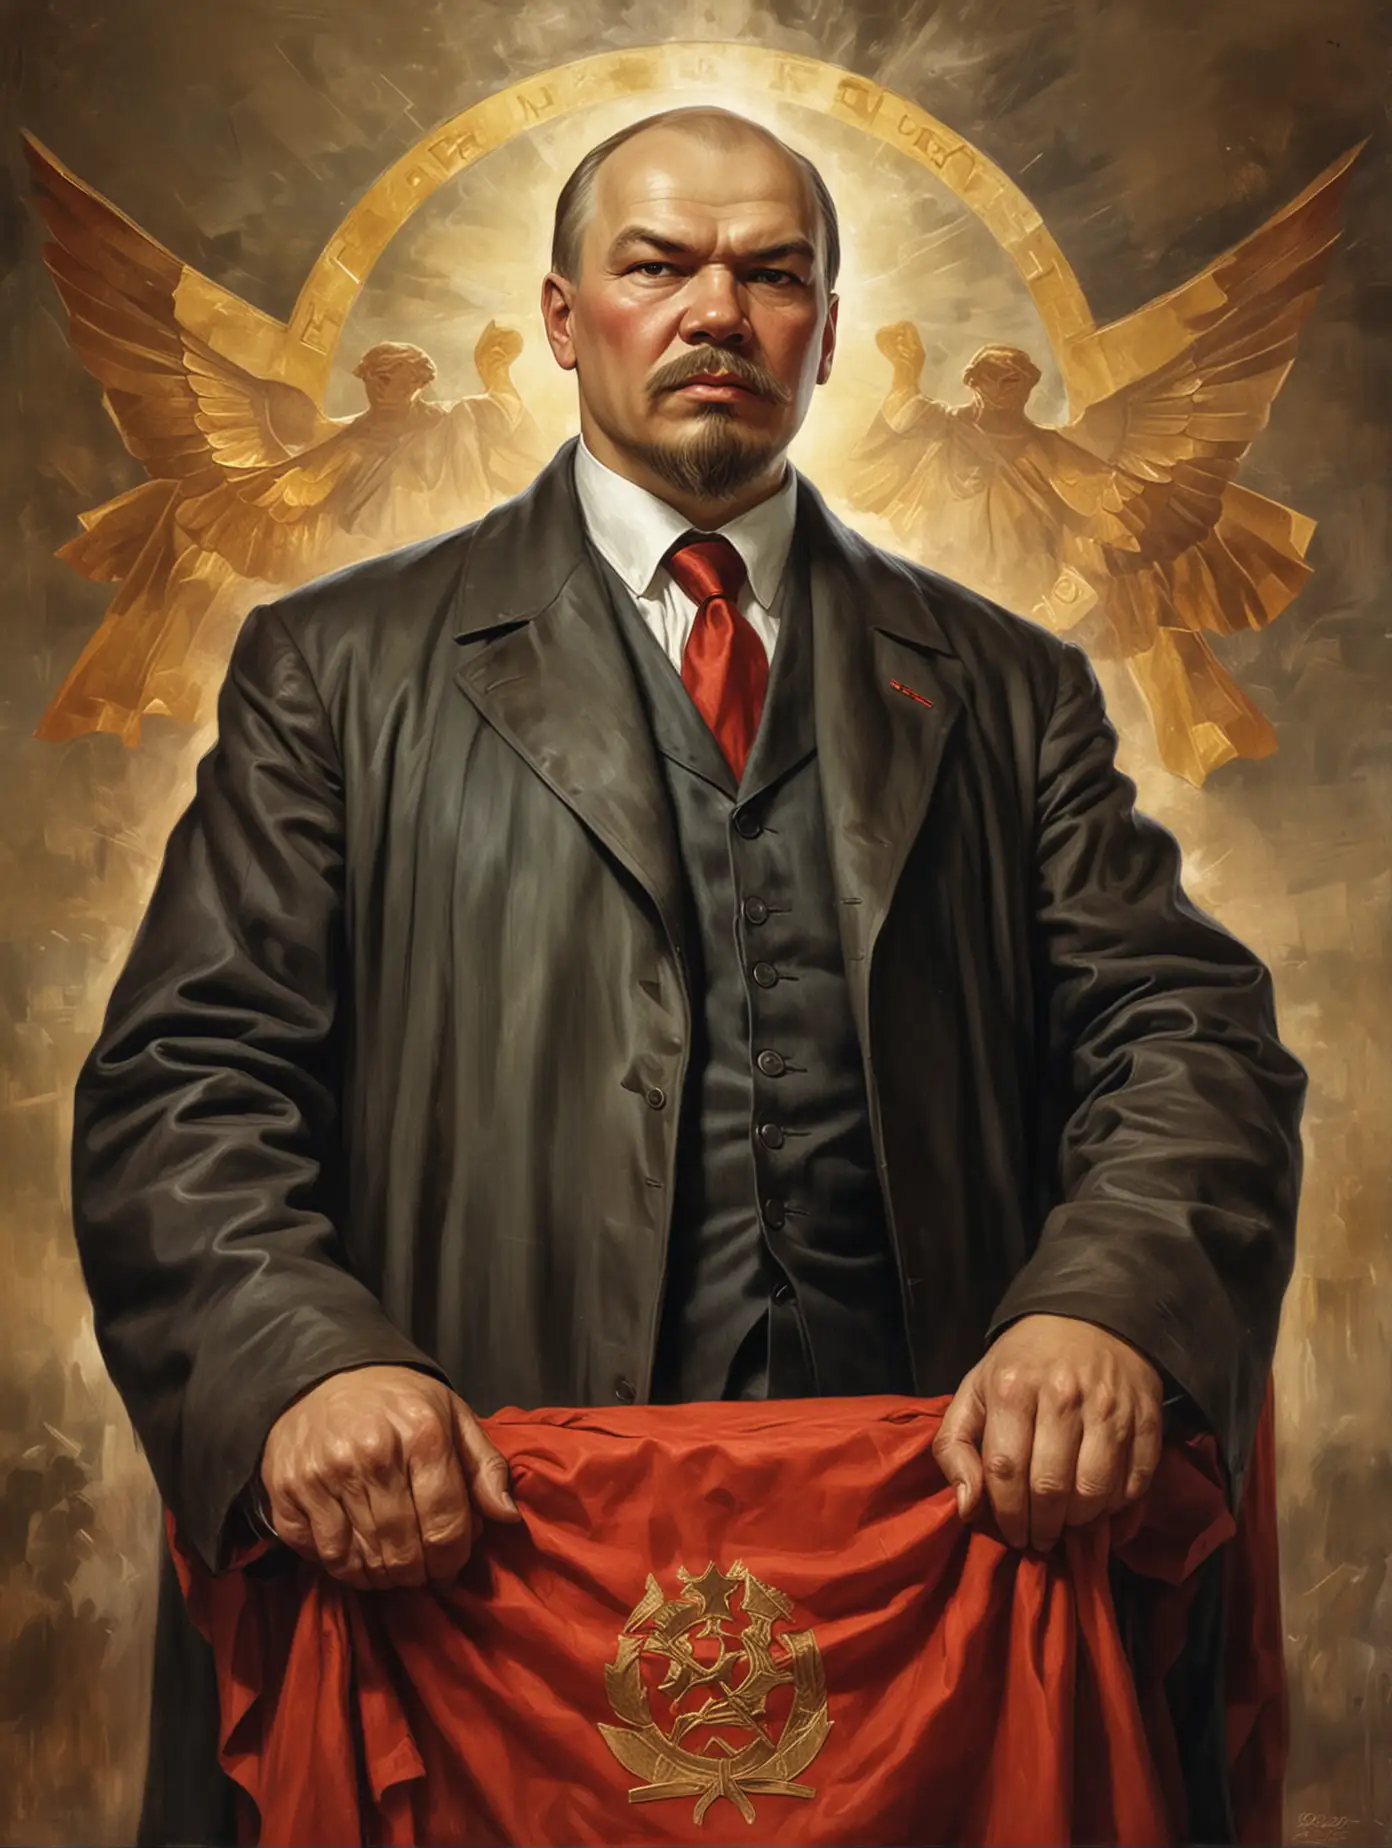 Lenin the God of communism, Lord of proletariat